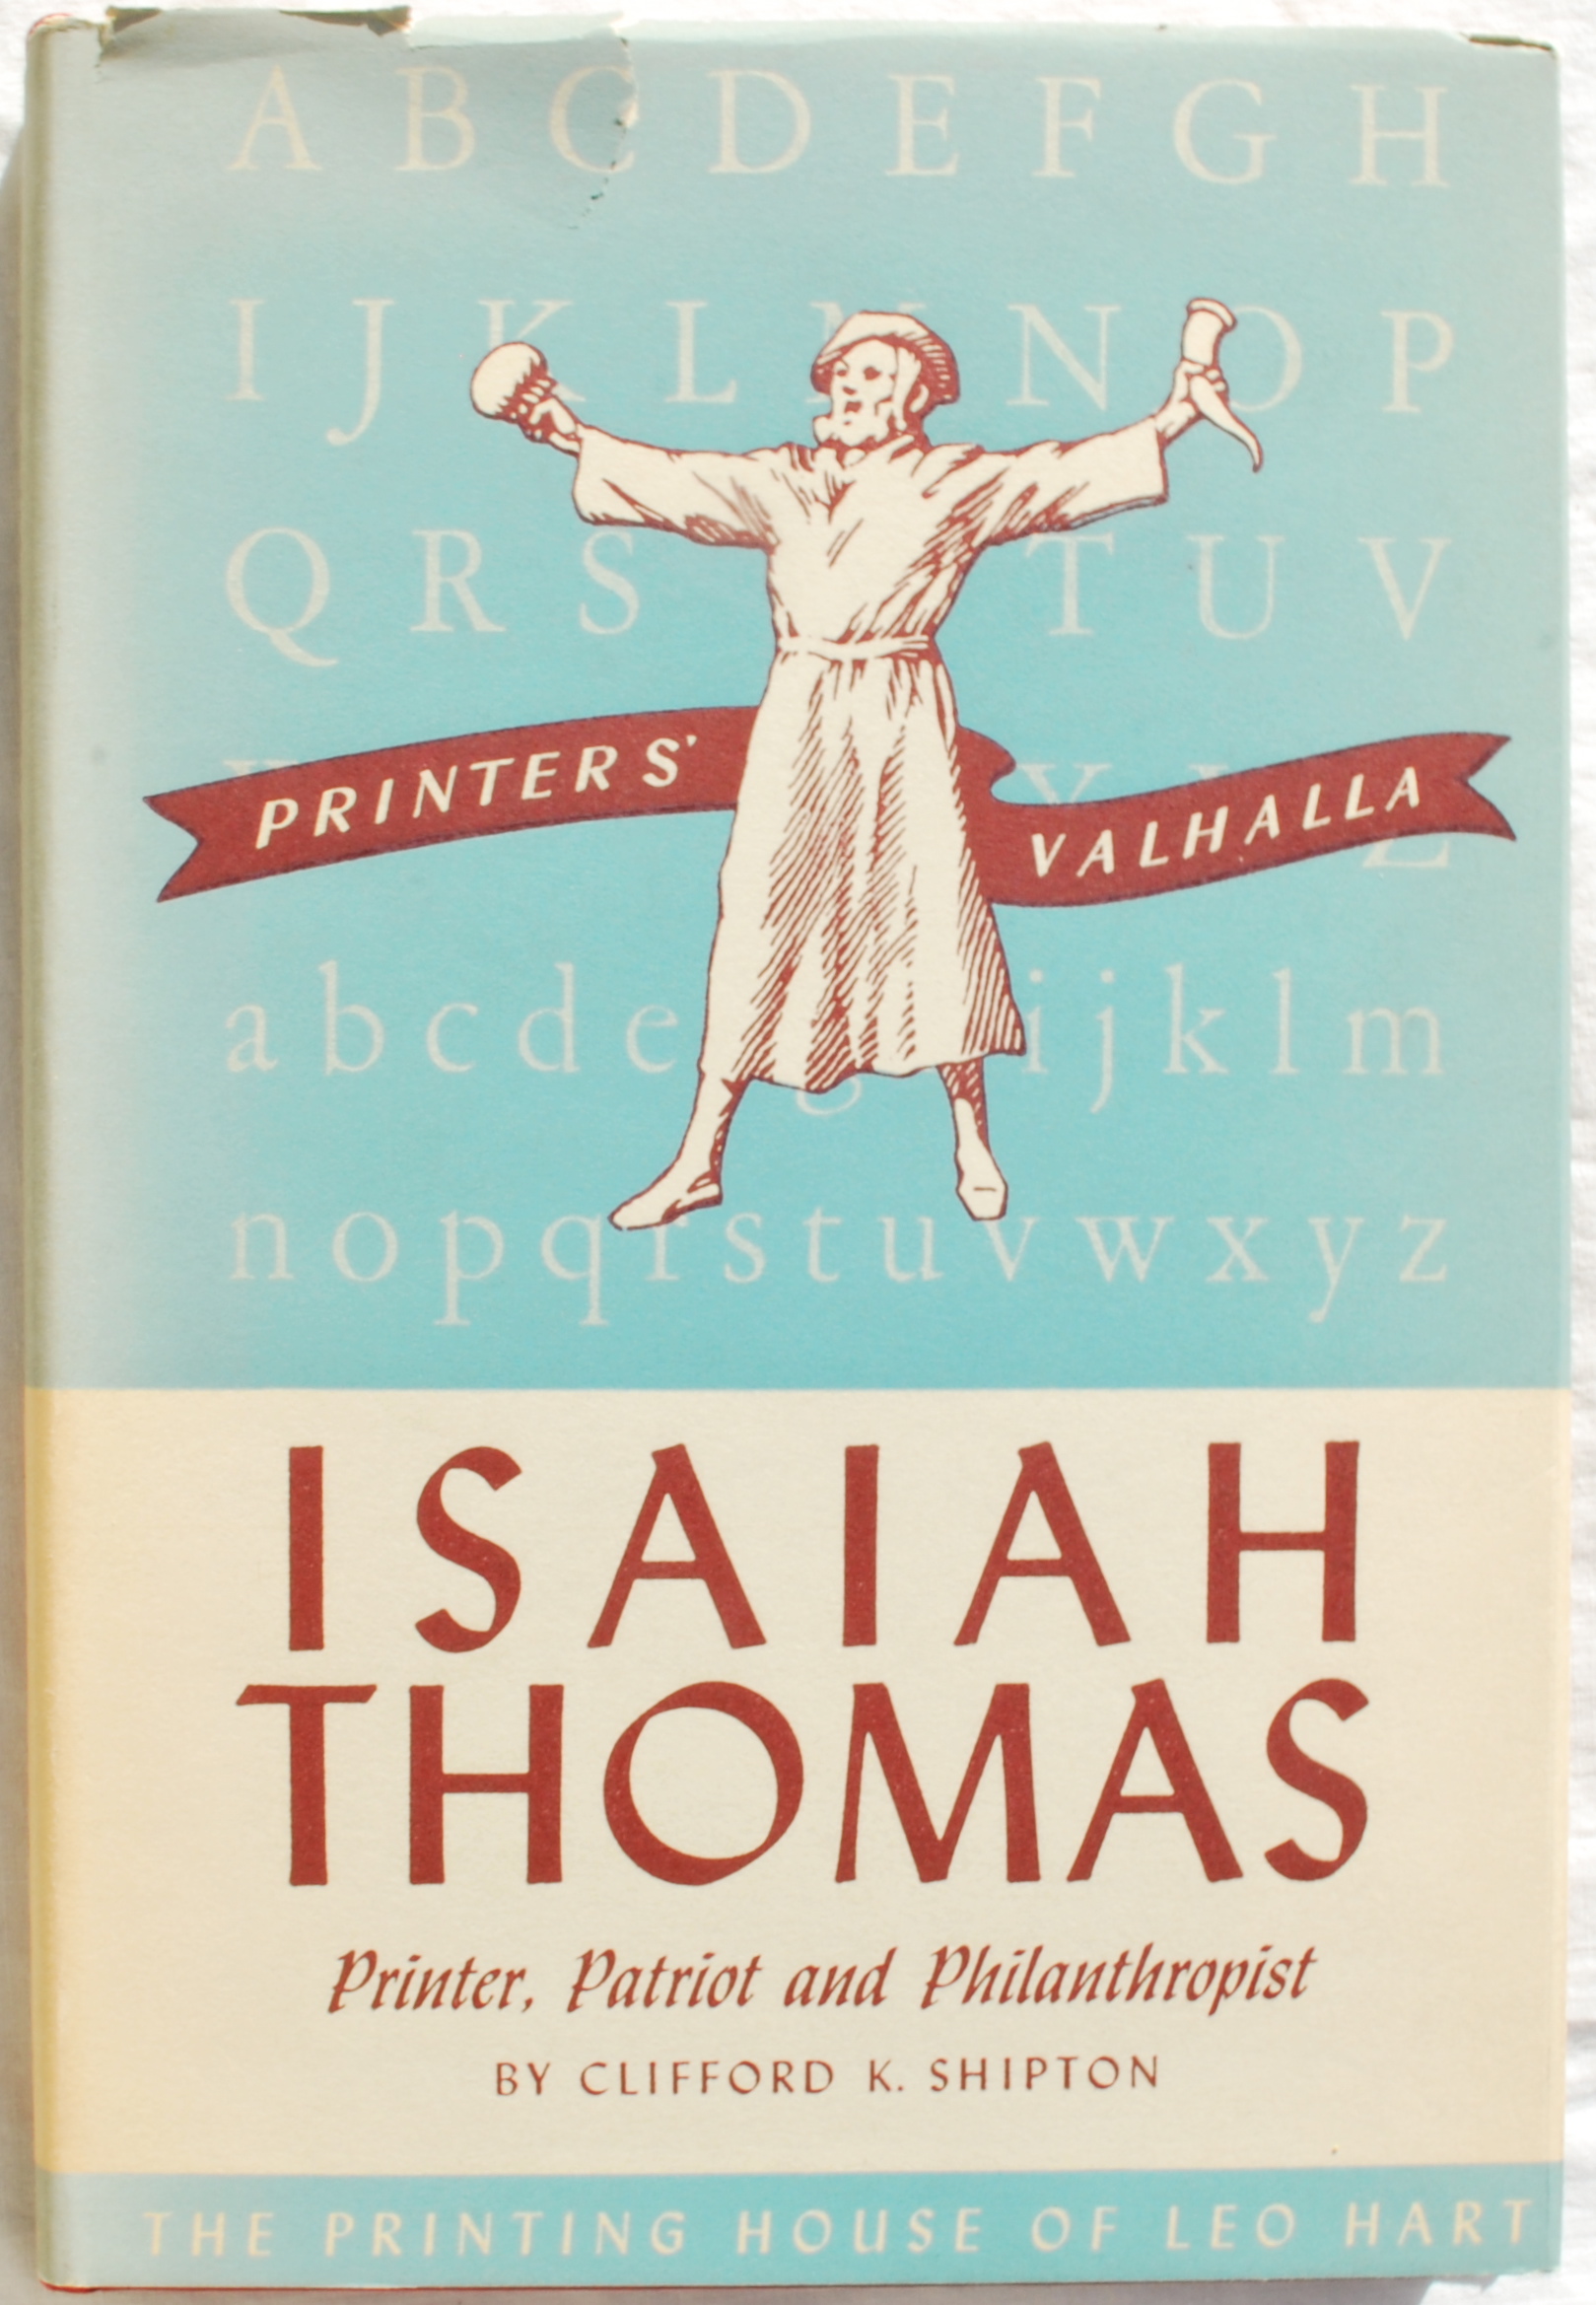 Isaiah Thomas: Printer, Patriot and Philanthropist 1749-18311619 x 2338